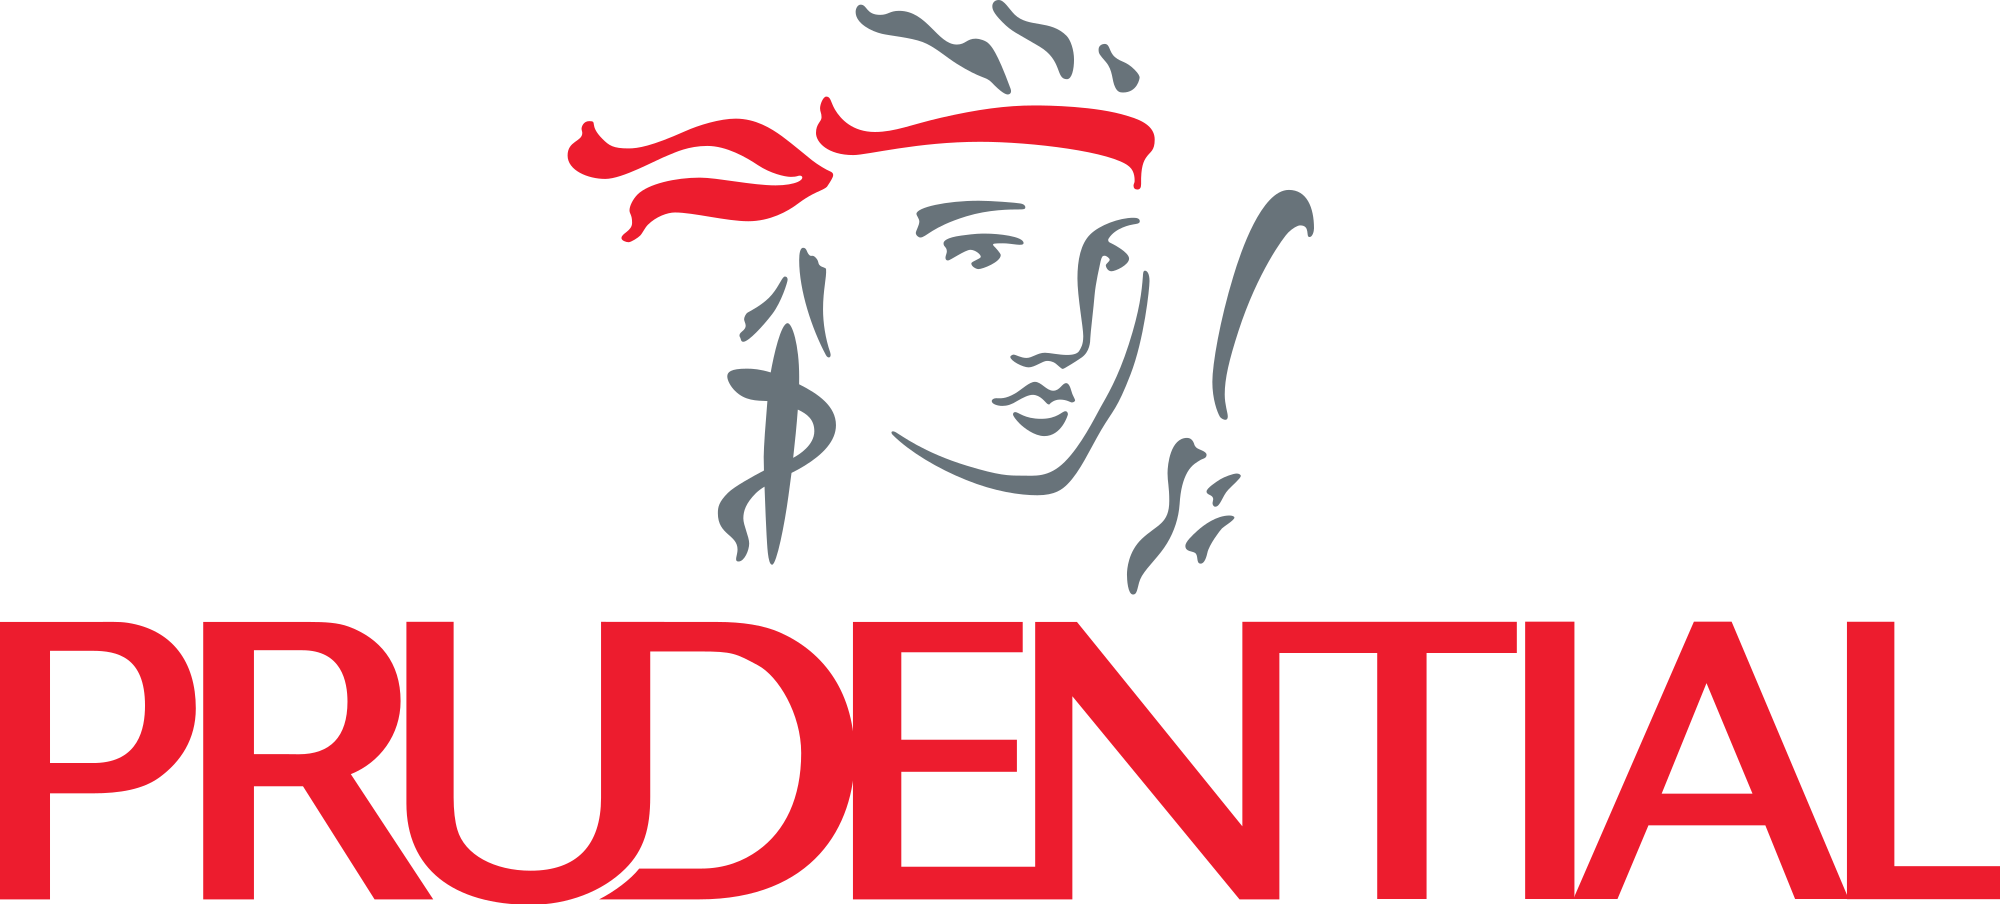 Prudential (UK) Brand Logo